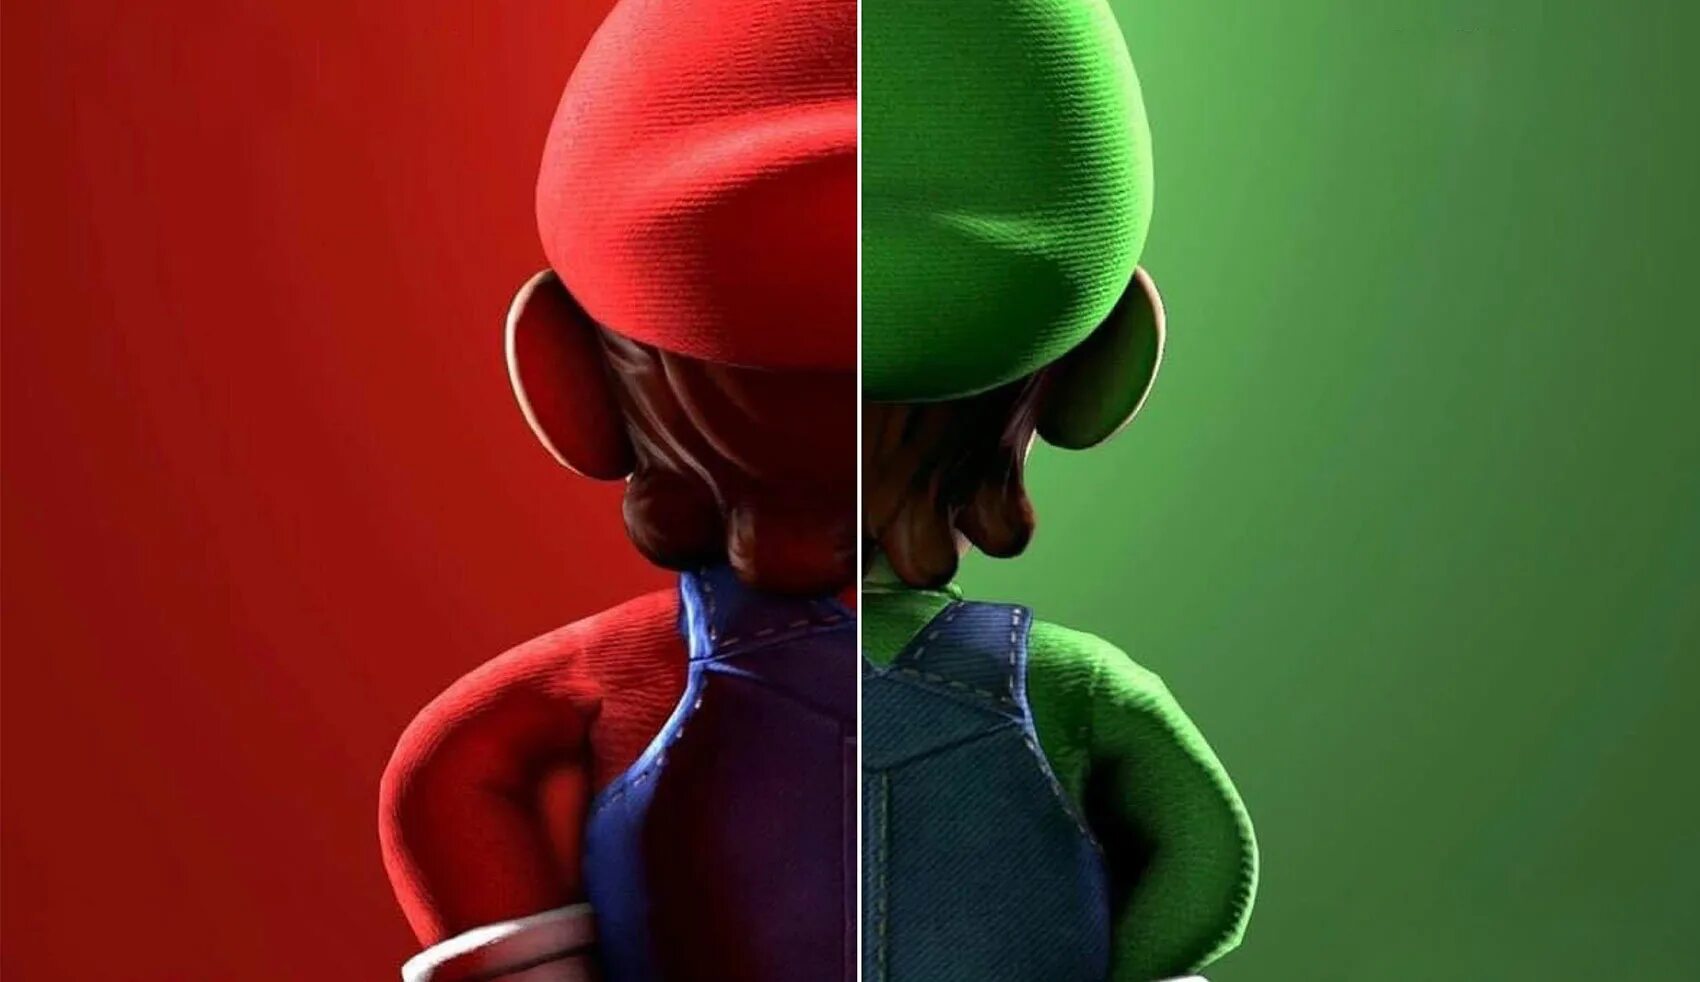 Mario bros 2023. Super Mario 2022 movie illumination. Супер братья Марио 2023.